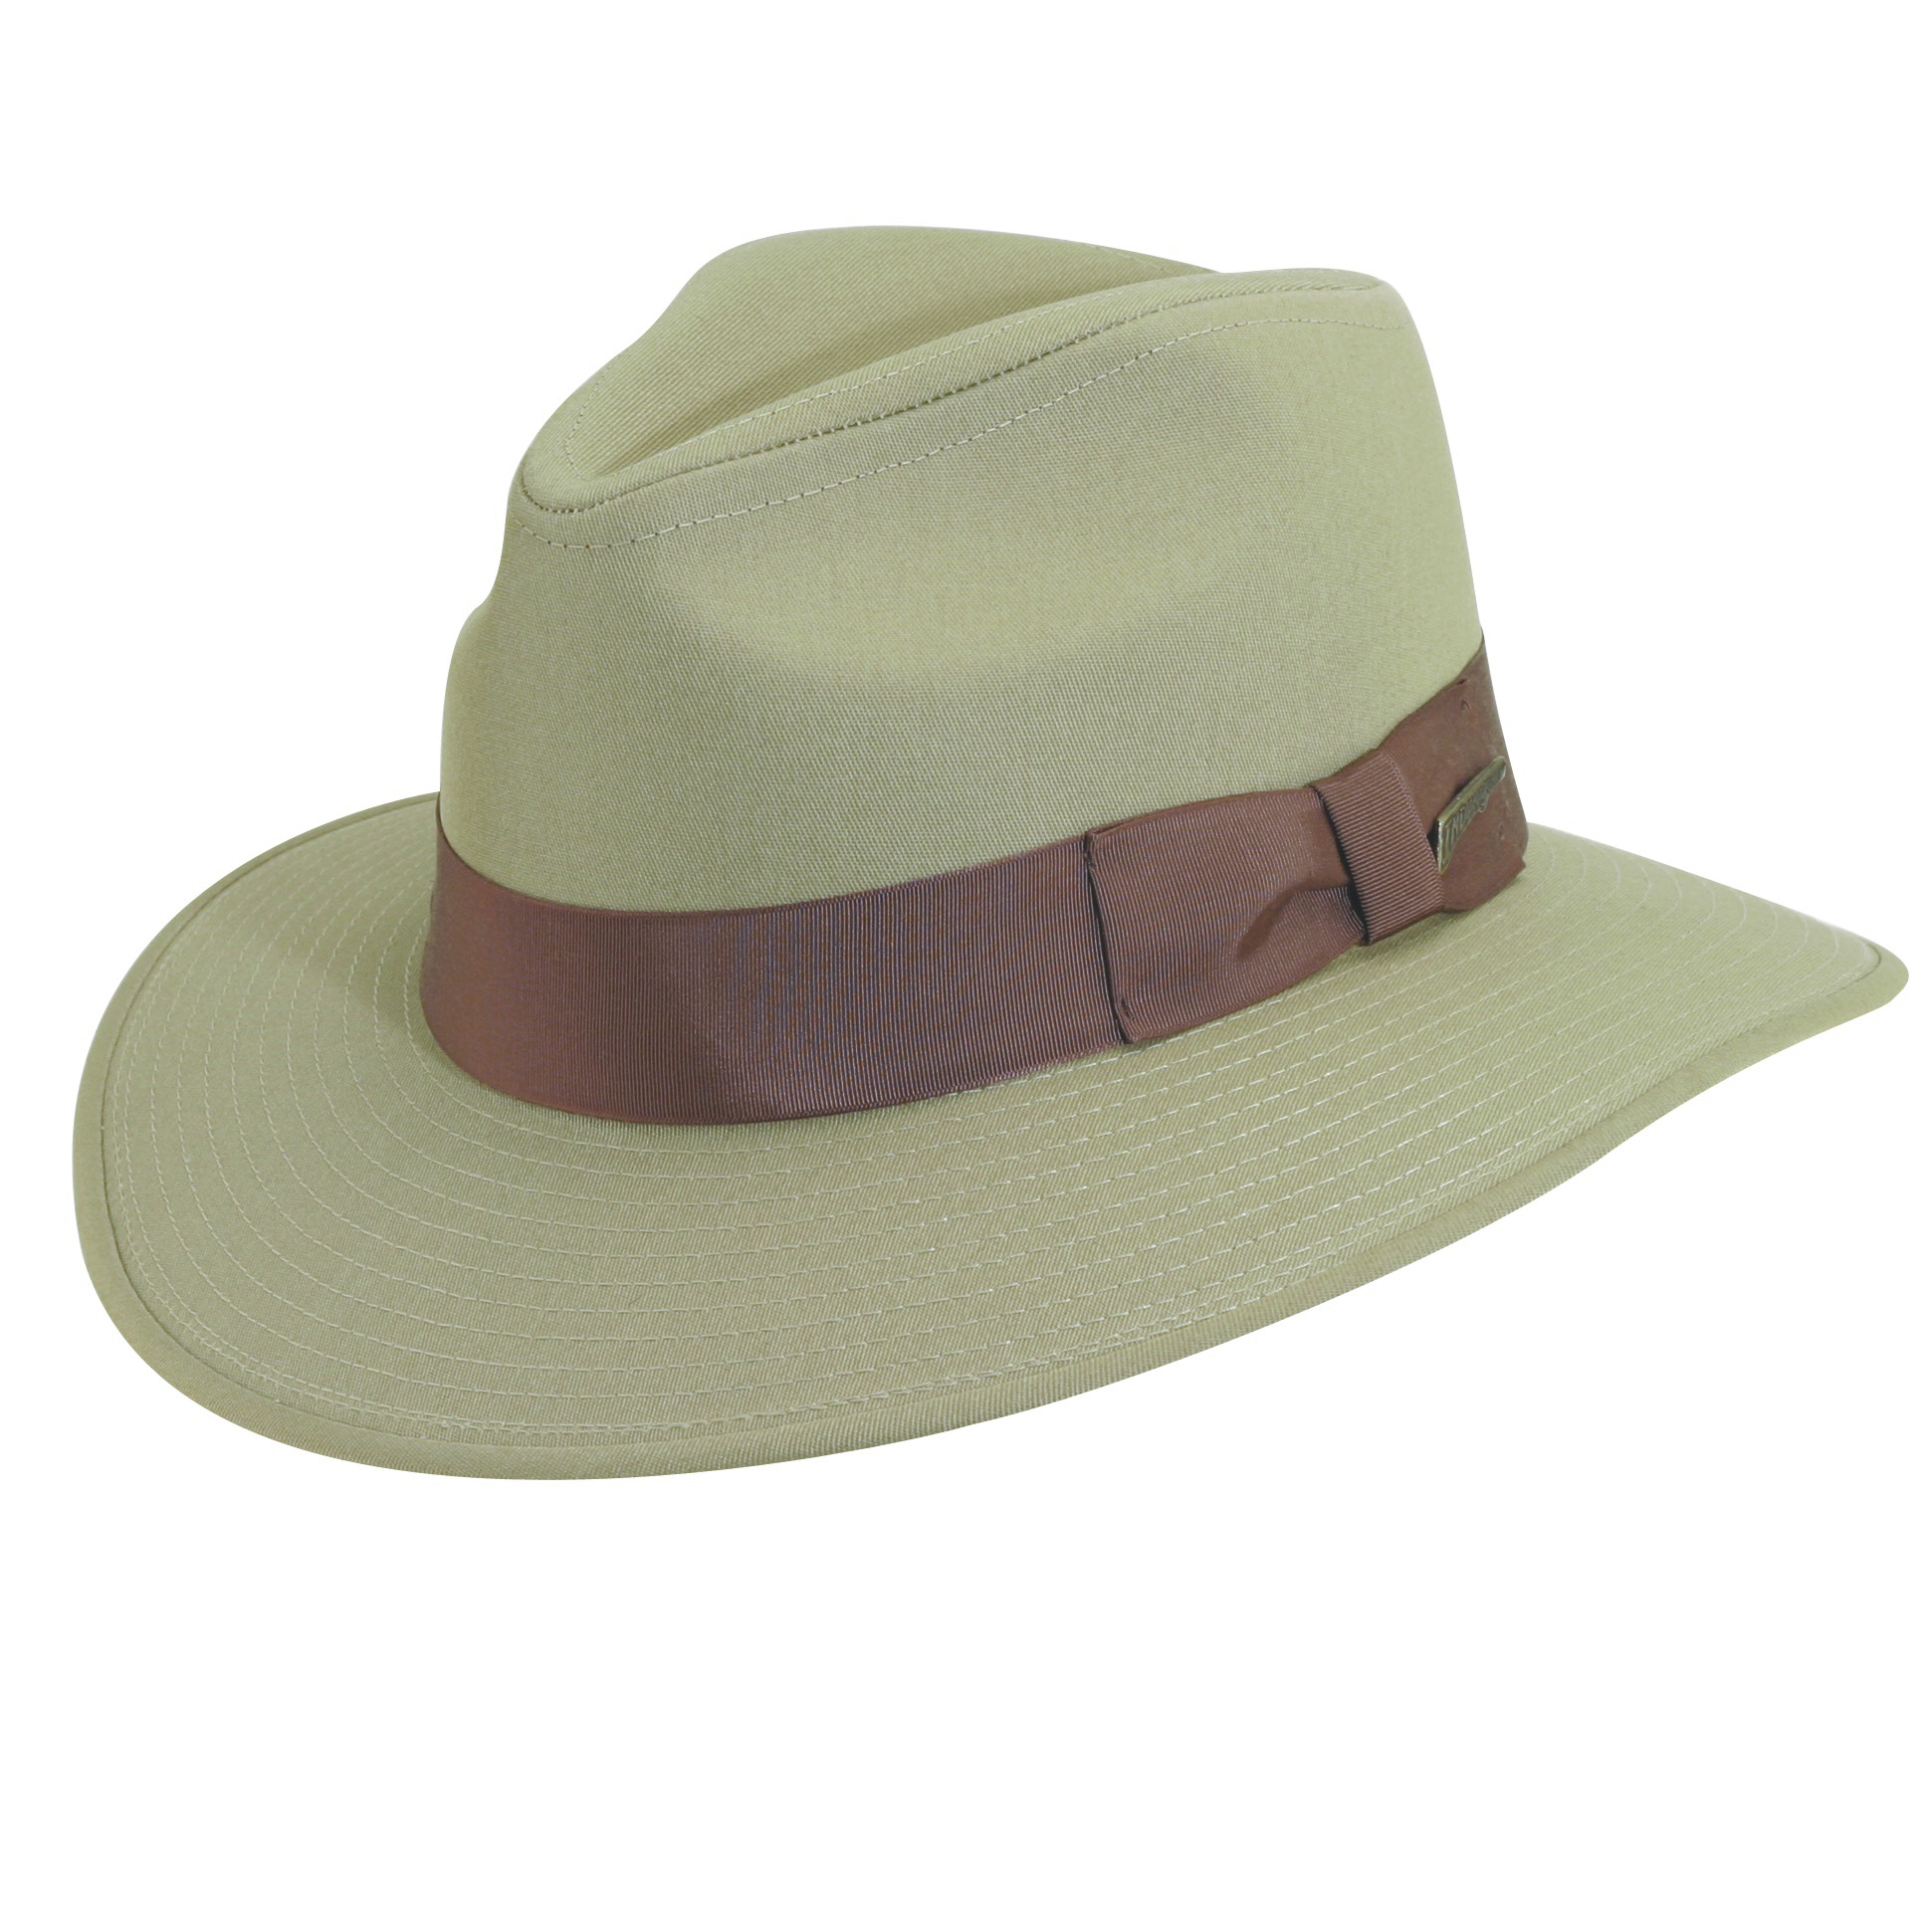 Indiana Jones Cotton Safari Hat - Explorer Hats